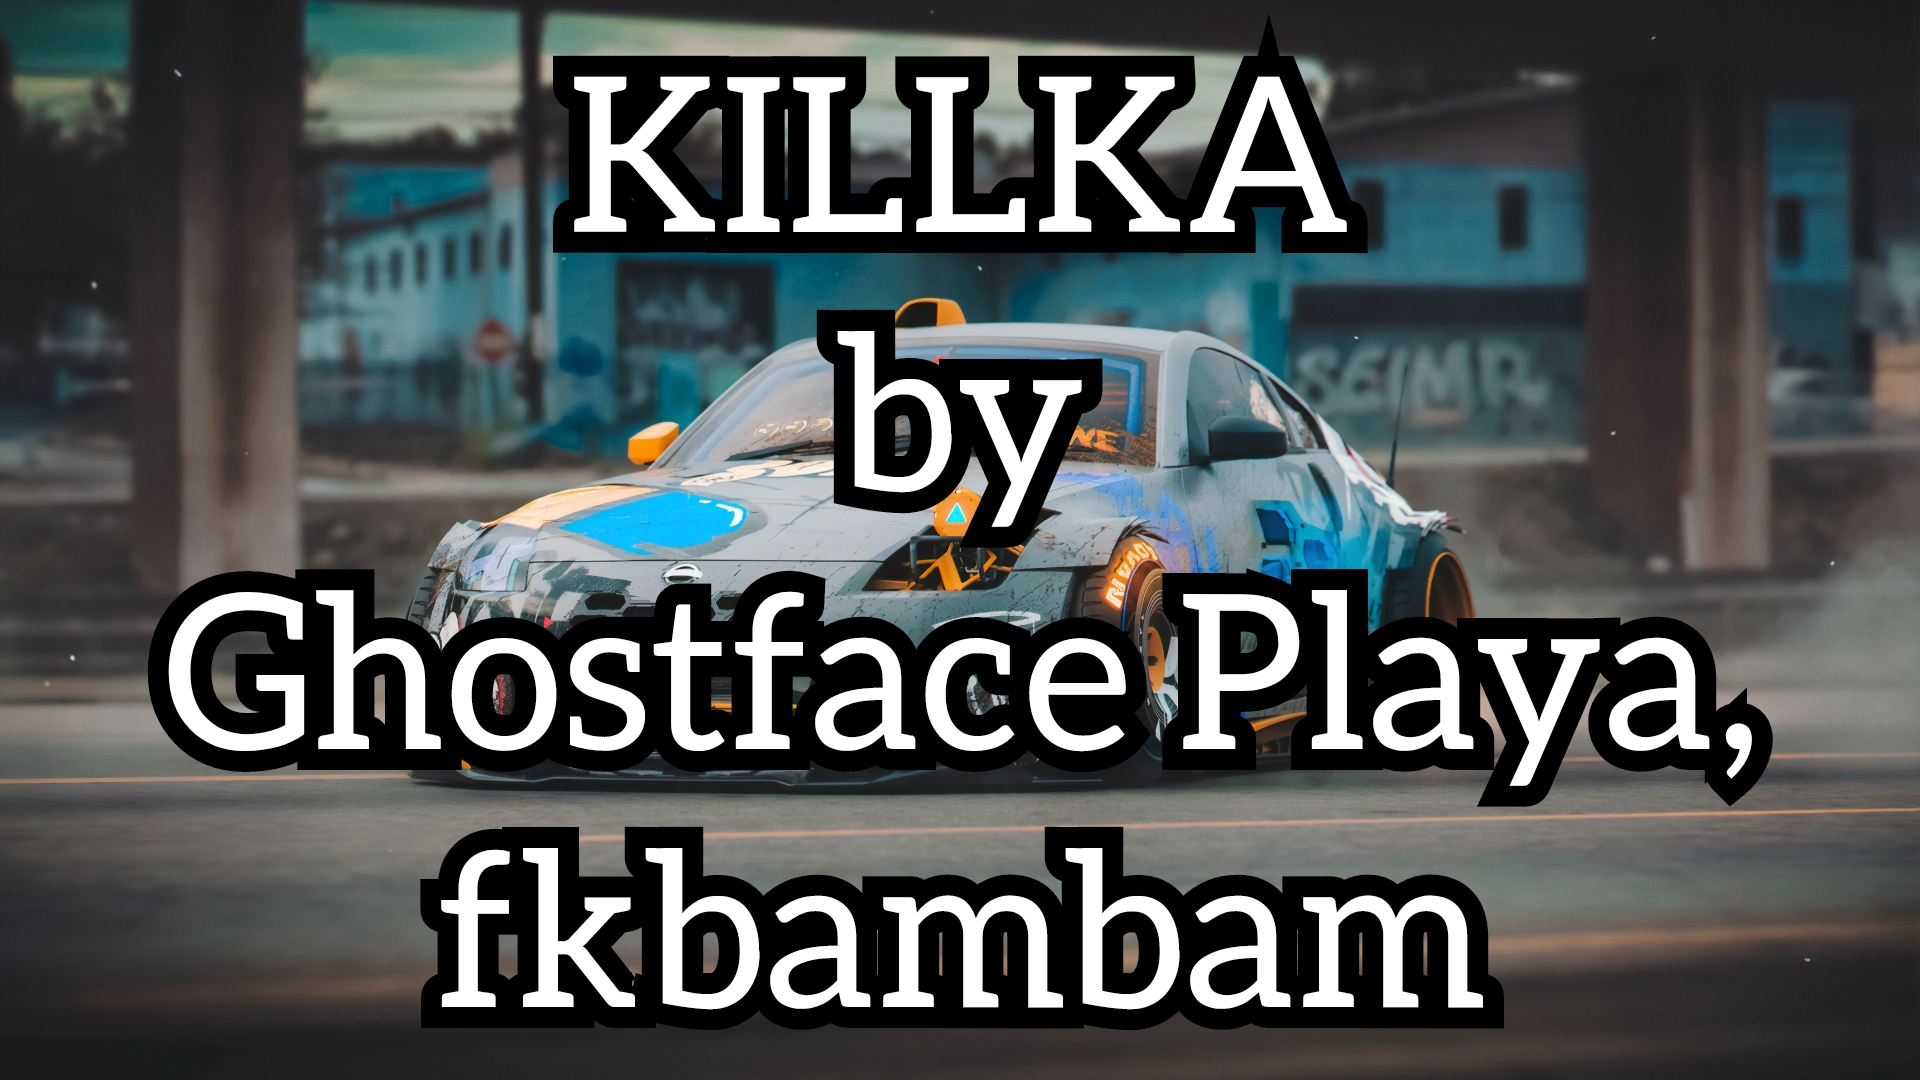 Ghostface Playa, fkbambam - KILLKA ► Phonk